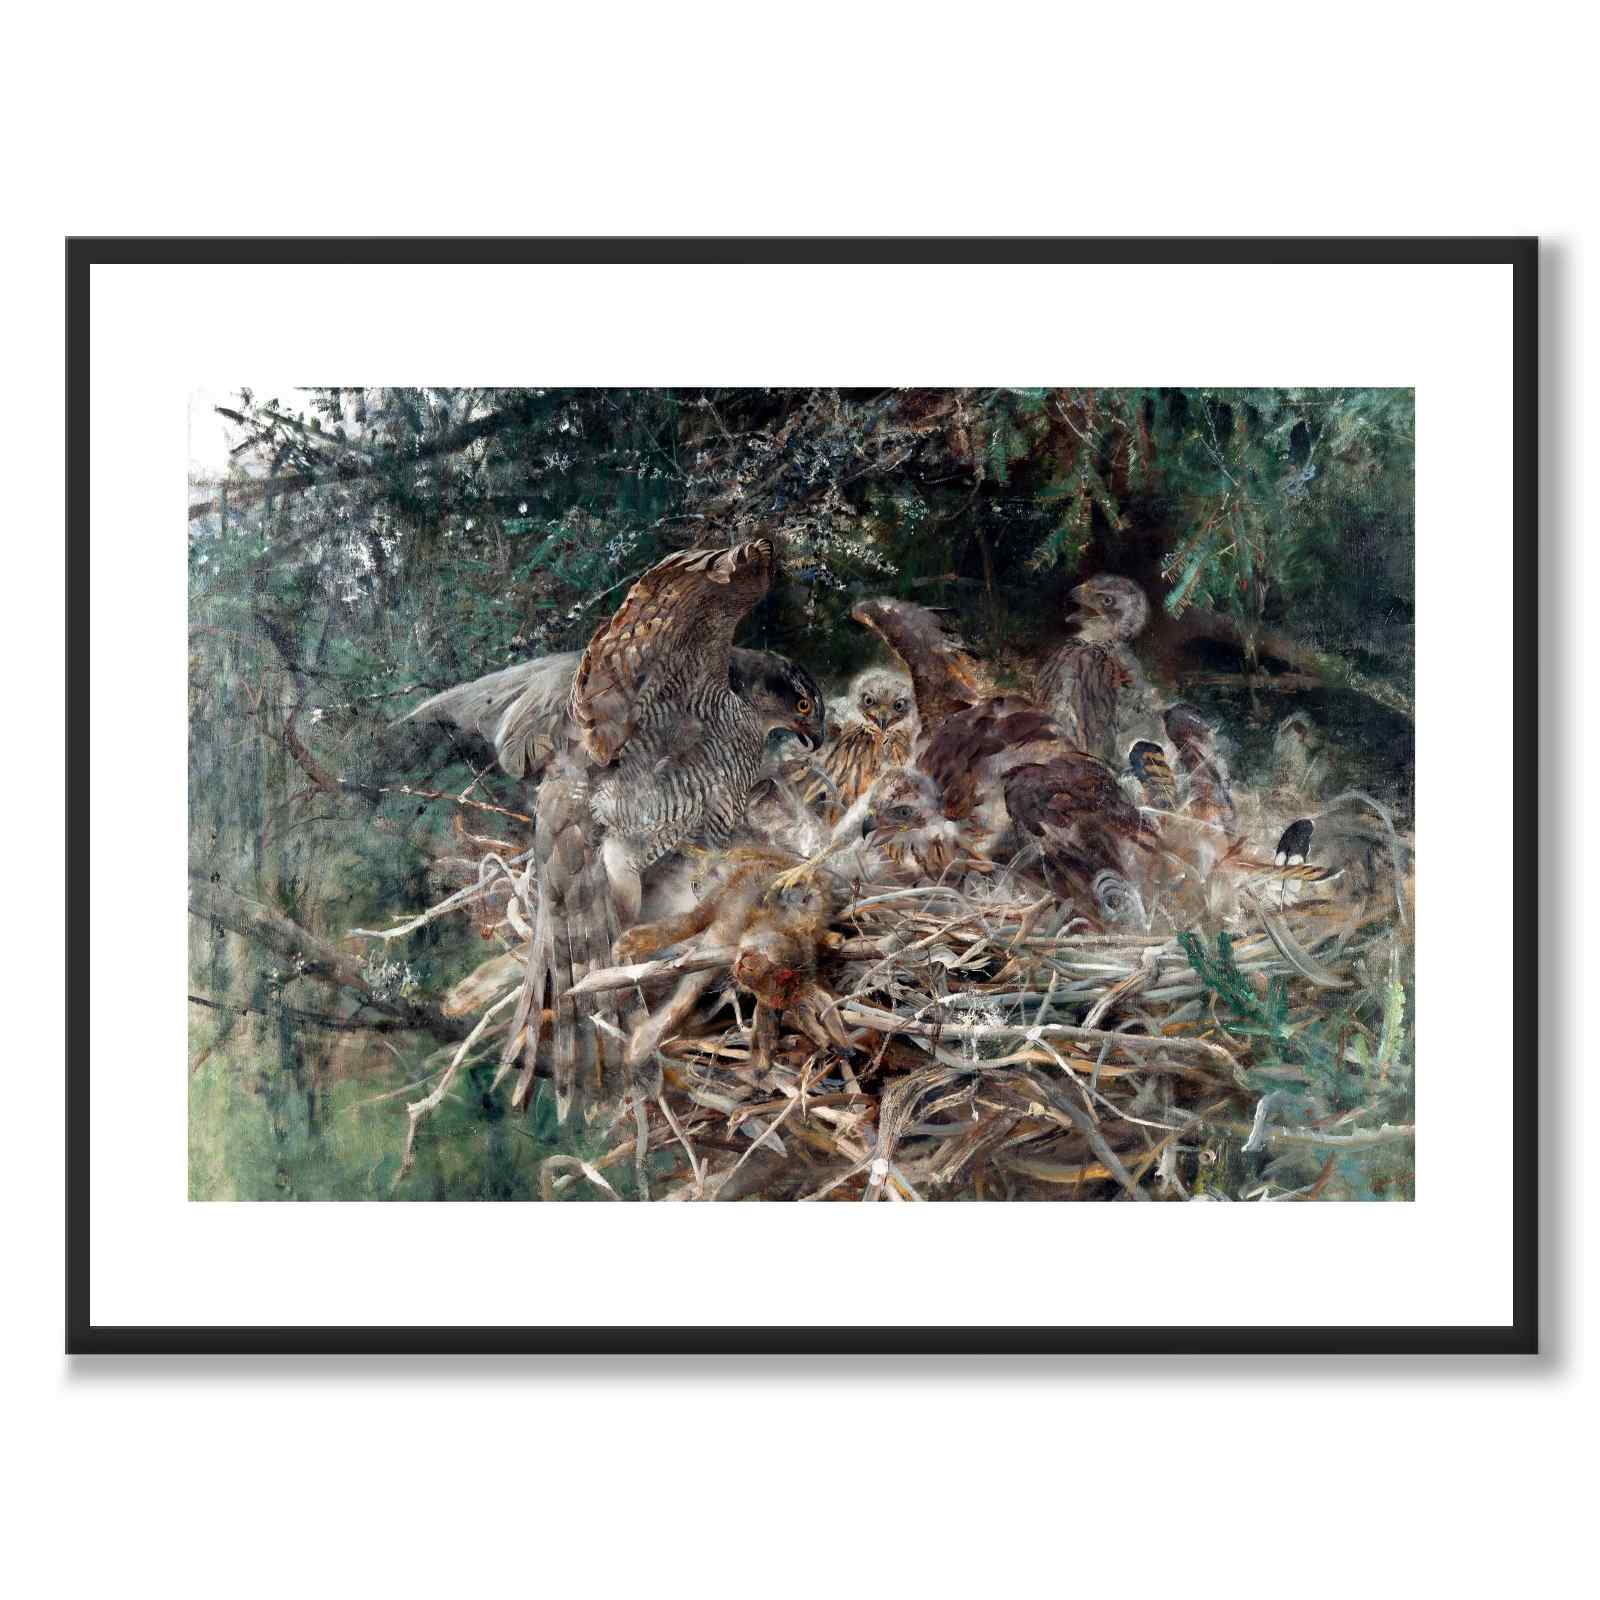 Hawk's nest - Poster